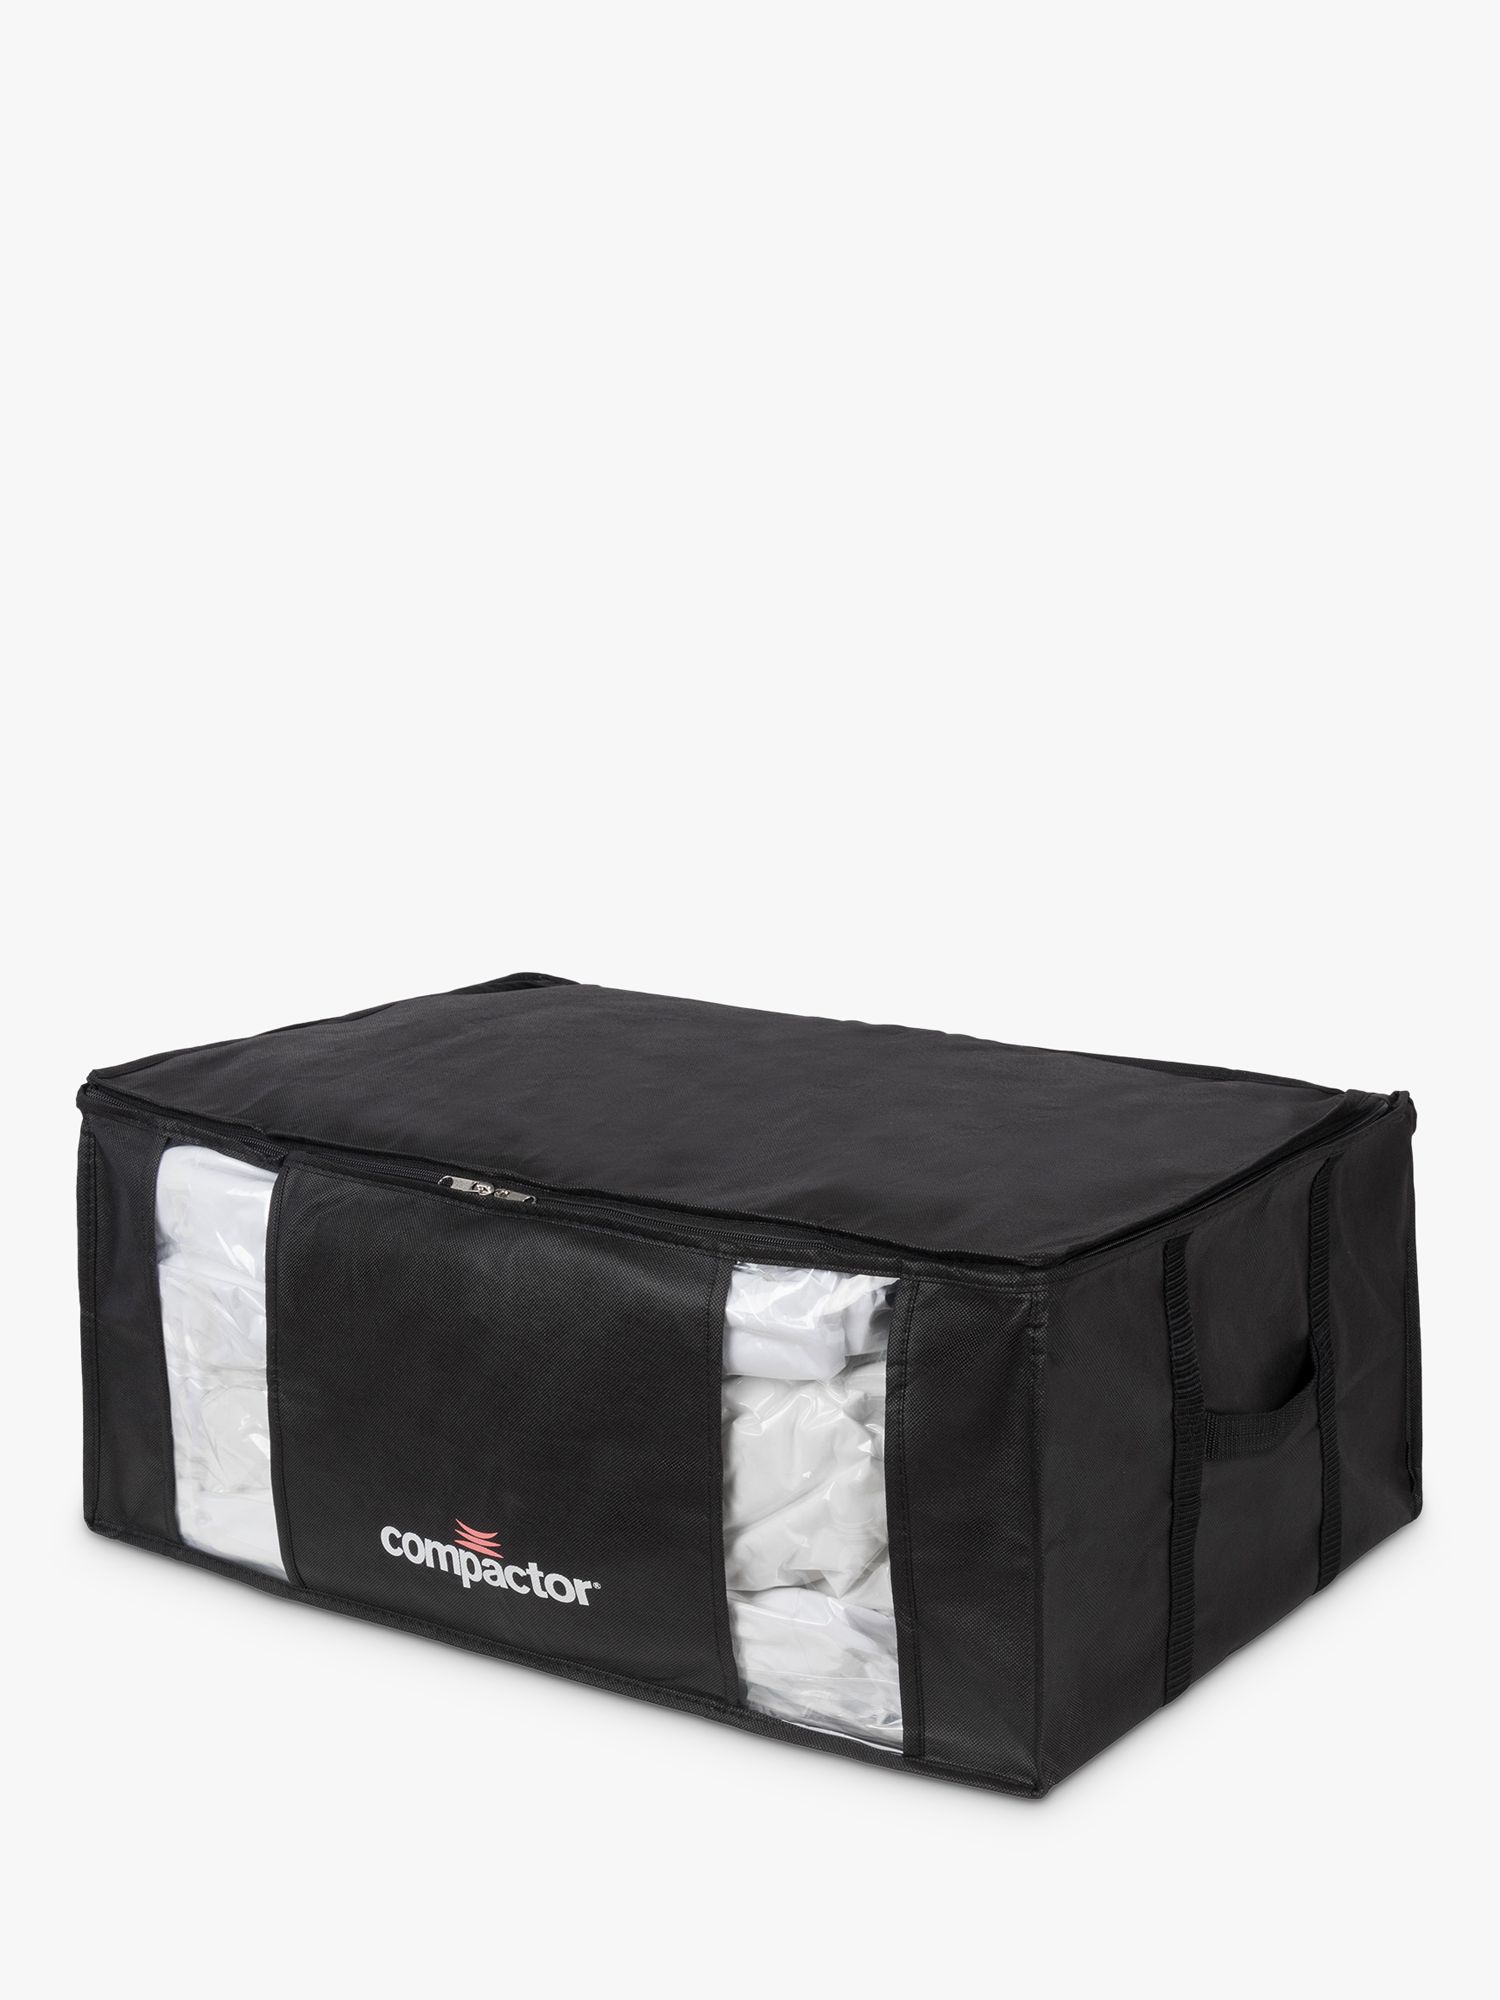 Compactor Vacuum Storage Bag, Black, 210L